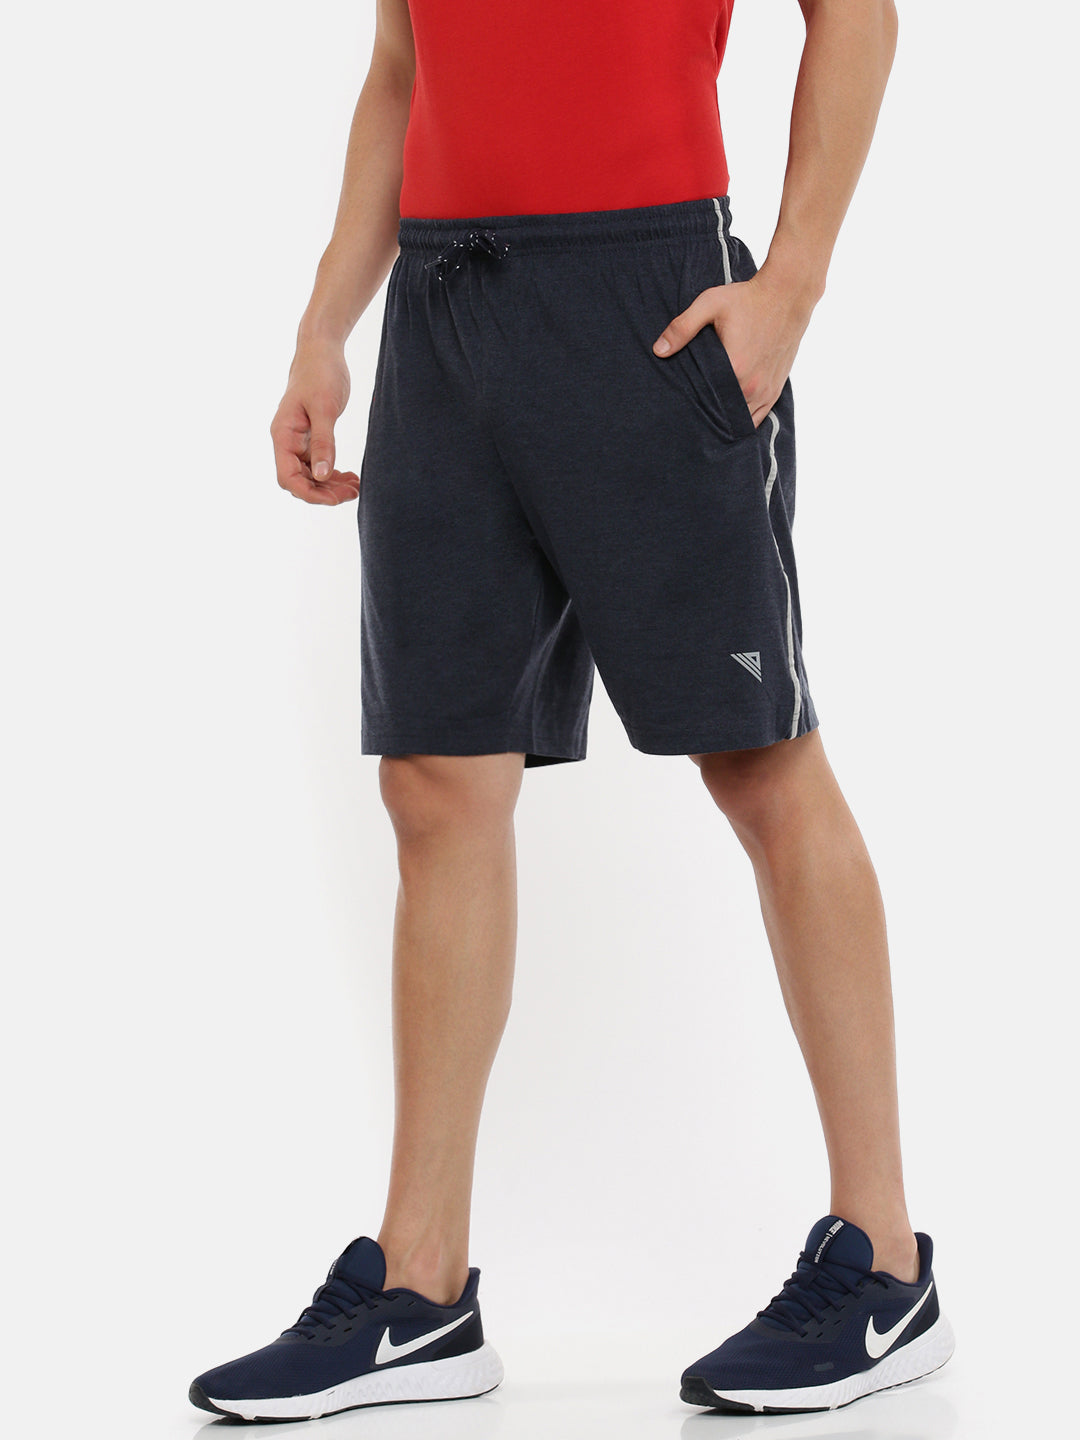 Men's Super Combed Cotton Comfort Fit One Side Zipper Shorts Blue-Sdie view